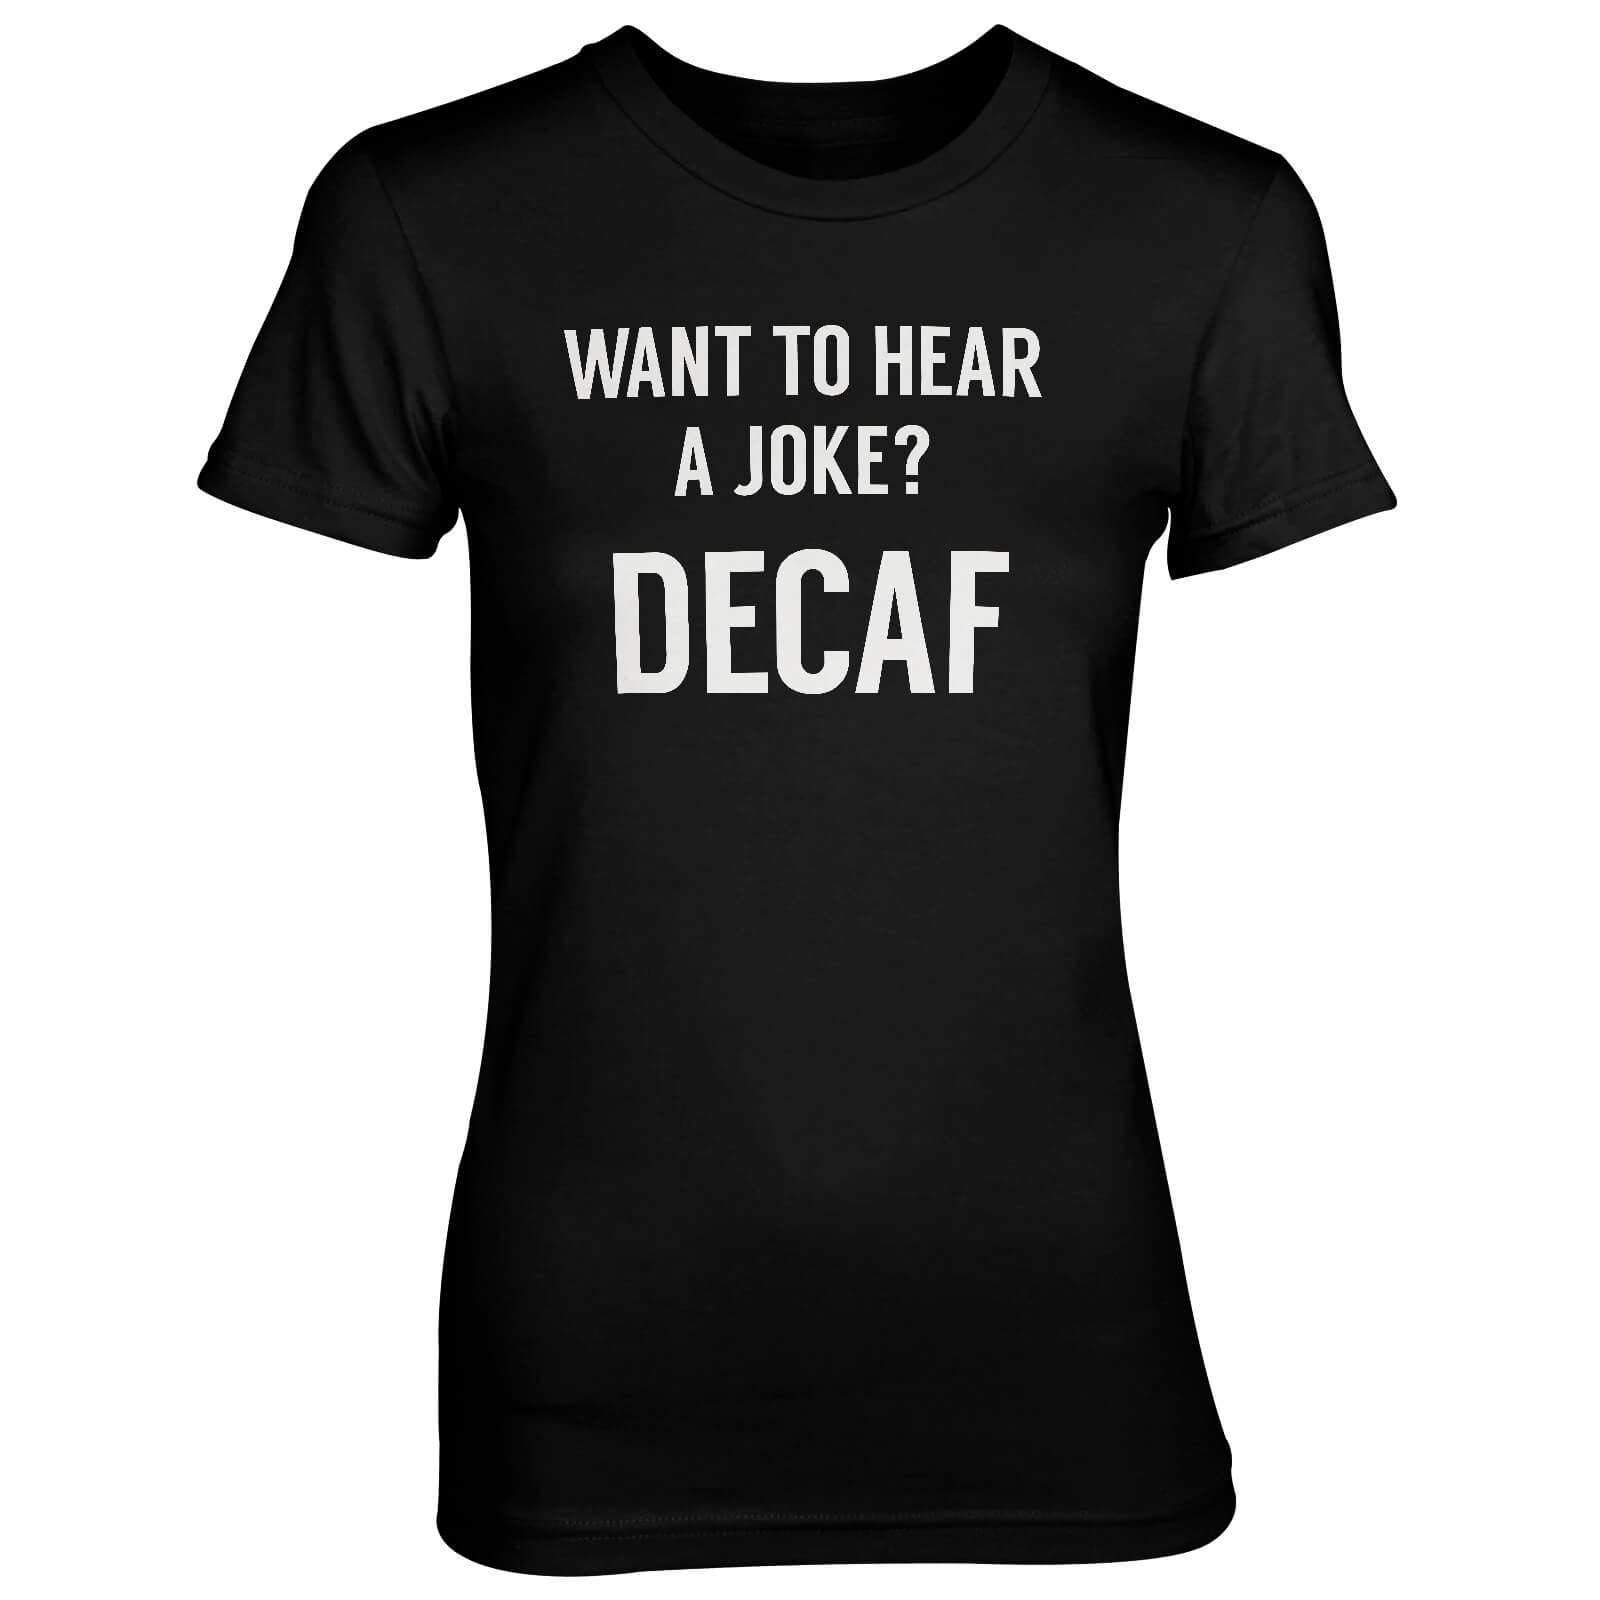 Want To Hear A Joke? DECAF Women's Black T-Shirt - S - Black